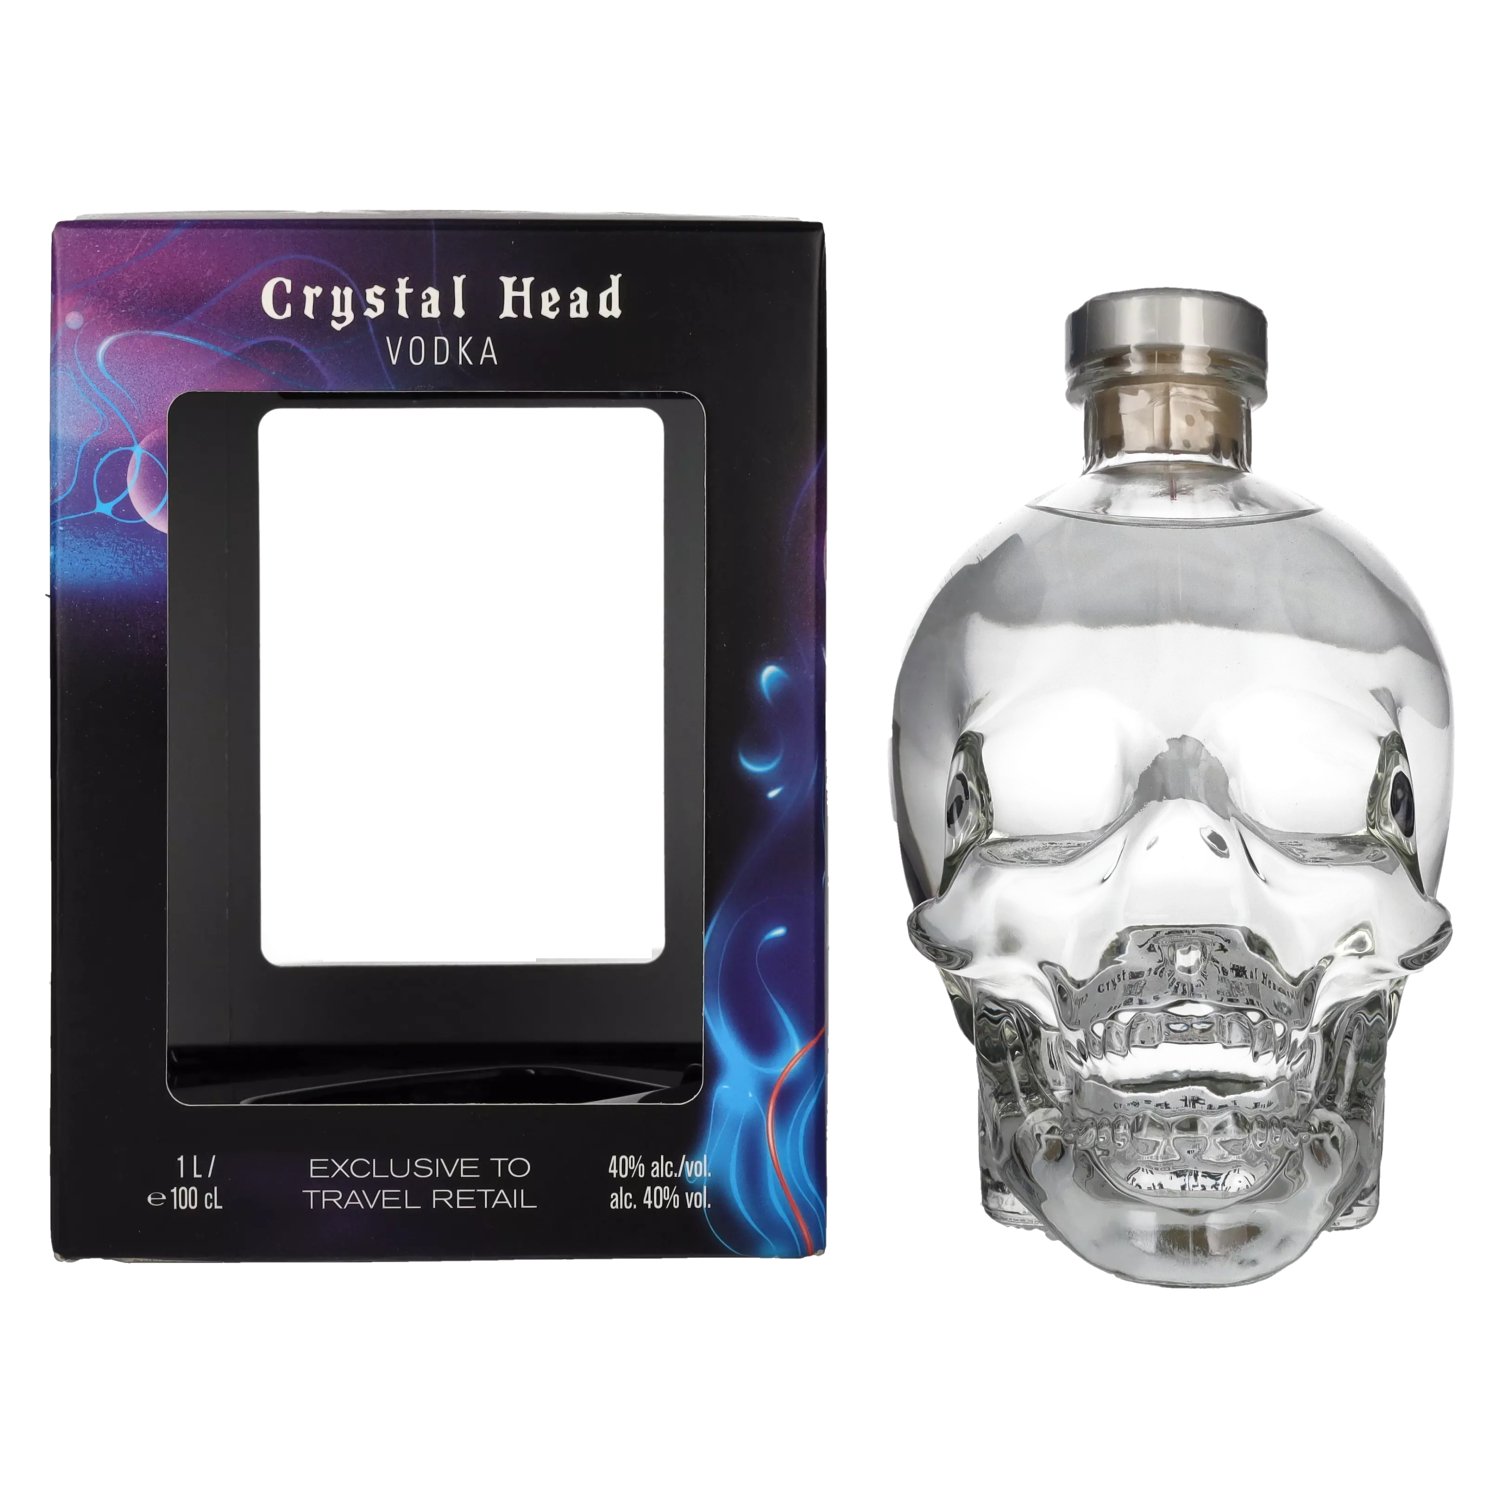 Crystal Head 40% 1L (kartón)